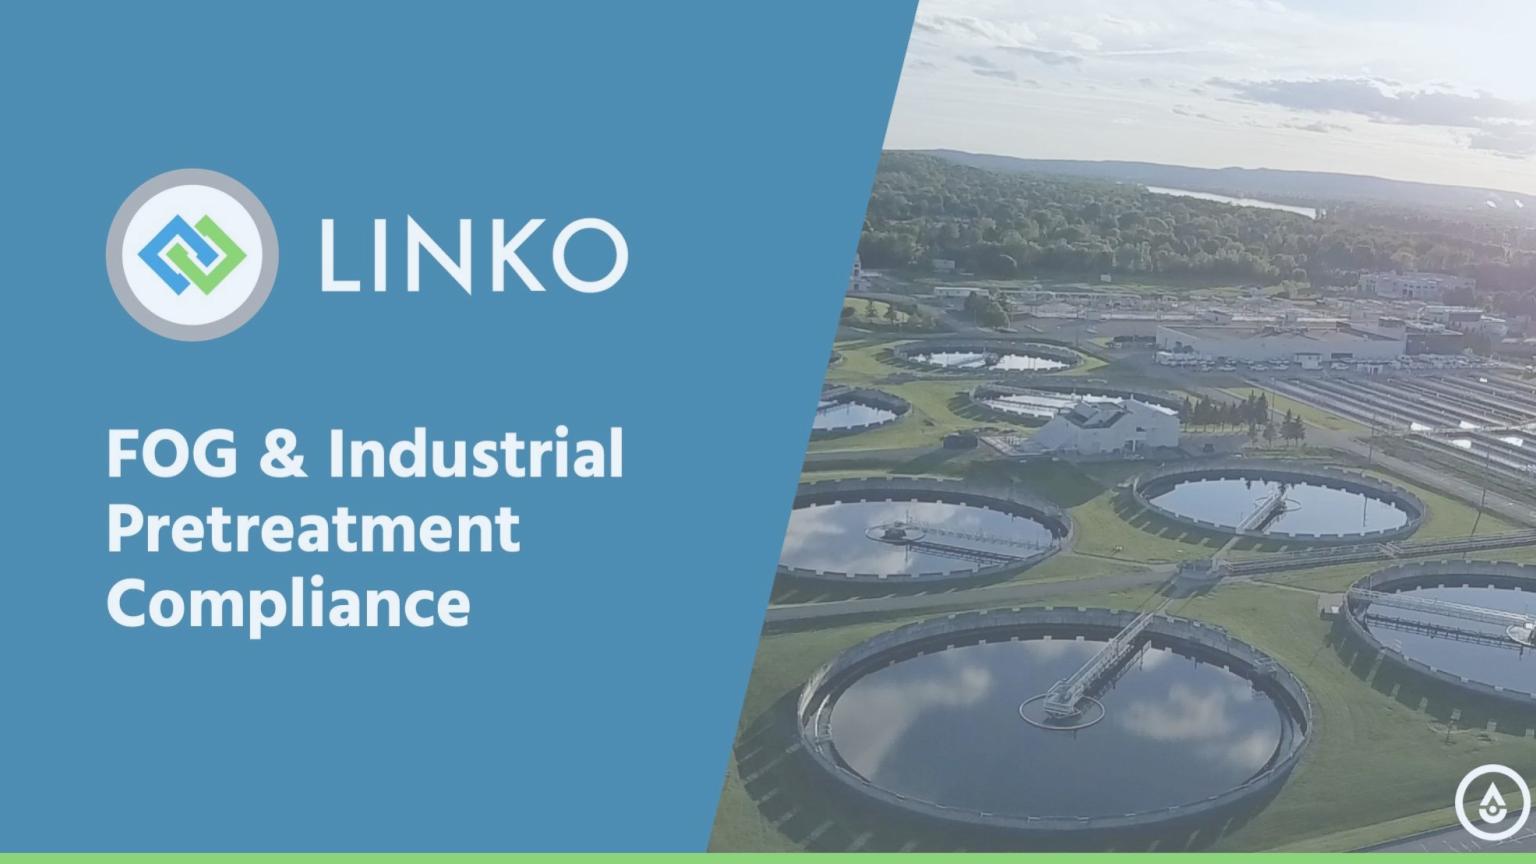 Linko Fog Industrial Pretreatment Compliance Software